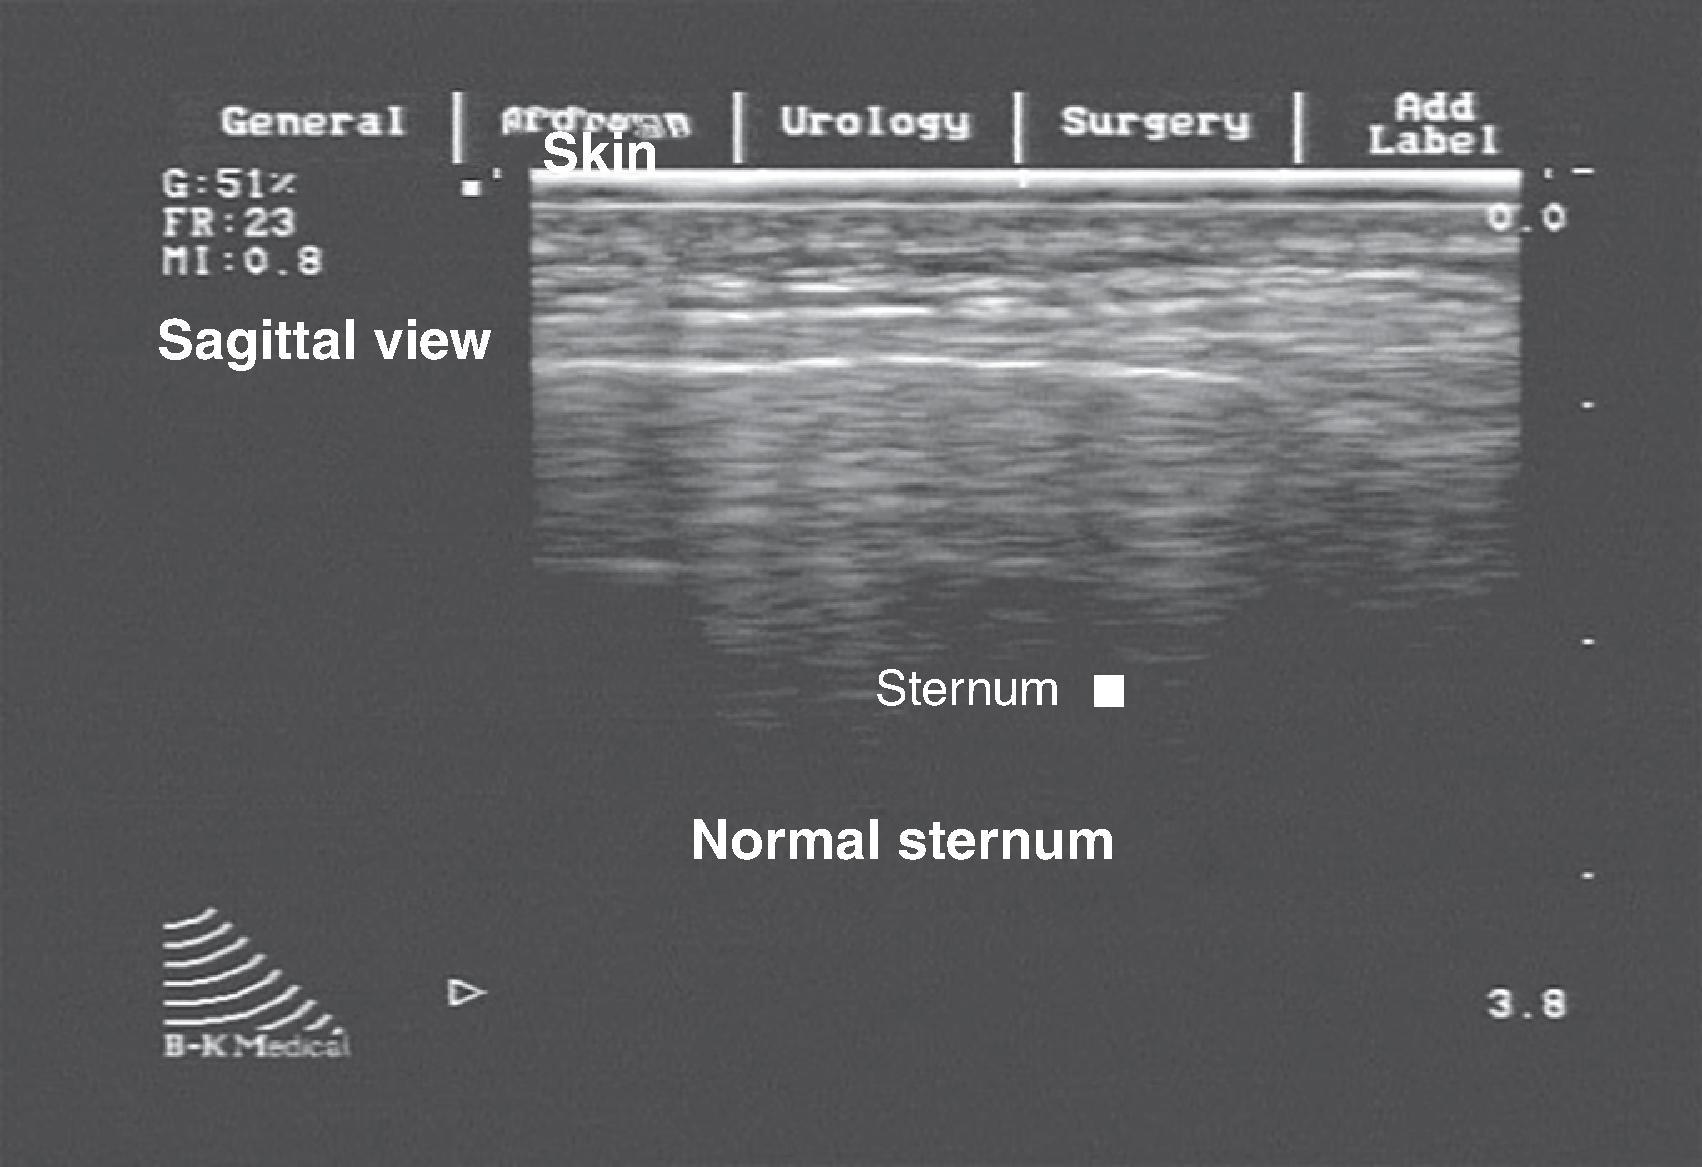 FIG. 9, Sagittal view of sternum illustrating normal findings.